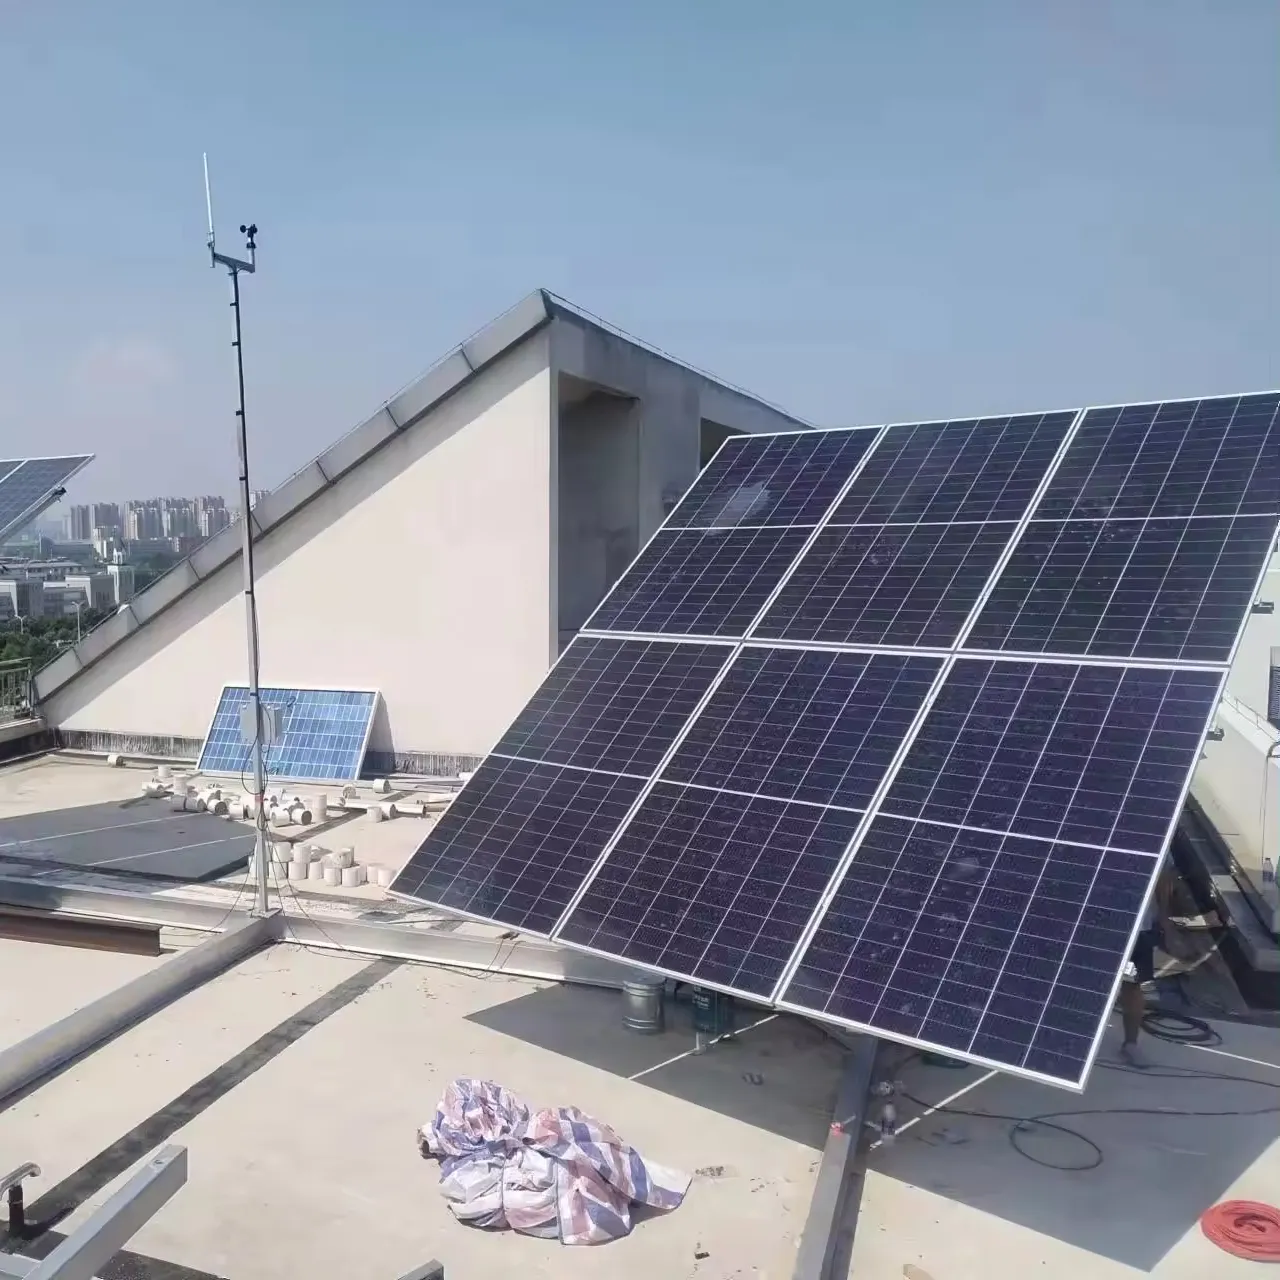 Novo material sistema de rastreamento fotovoltaico solar de 2 eixos rastreador automático energia solar energia limpa geração de energia solar inteligente 550w